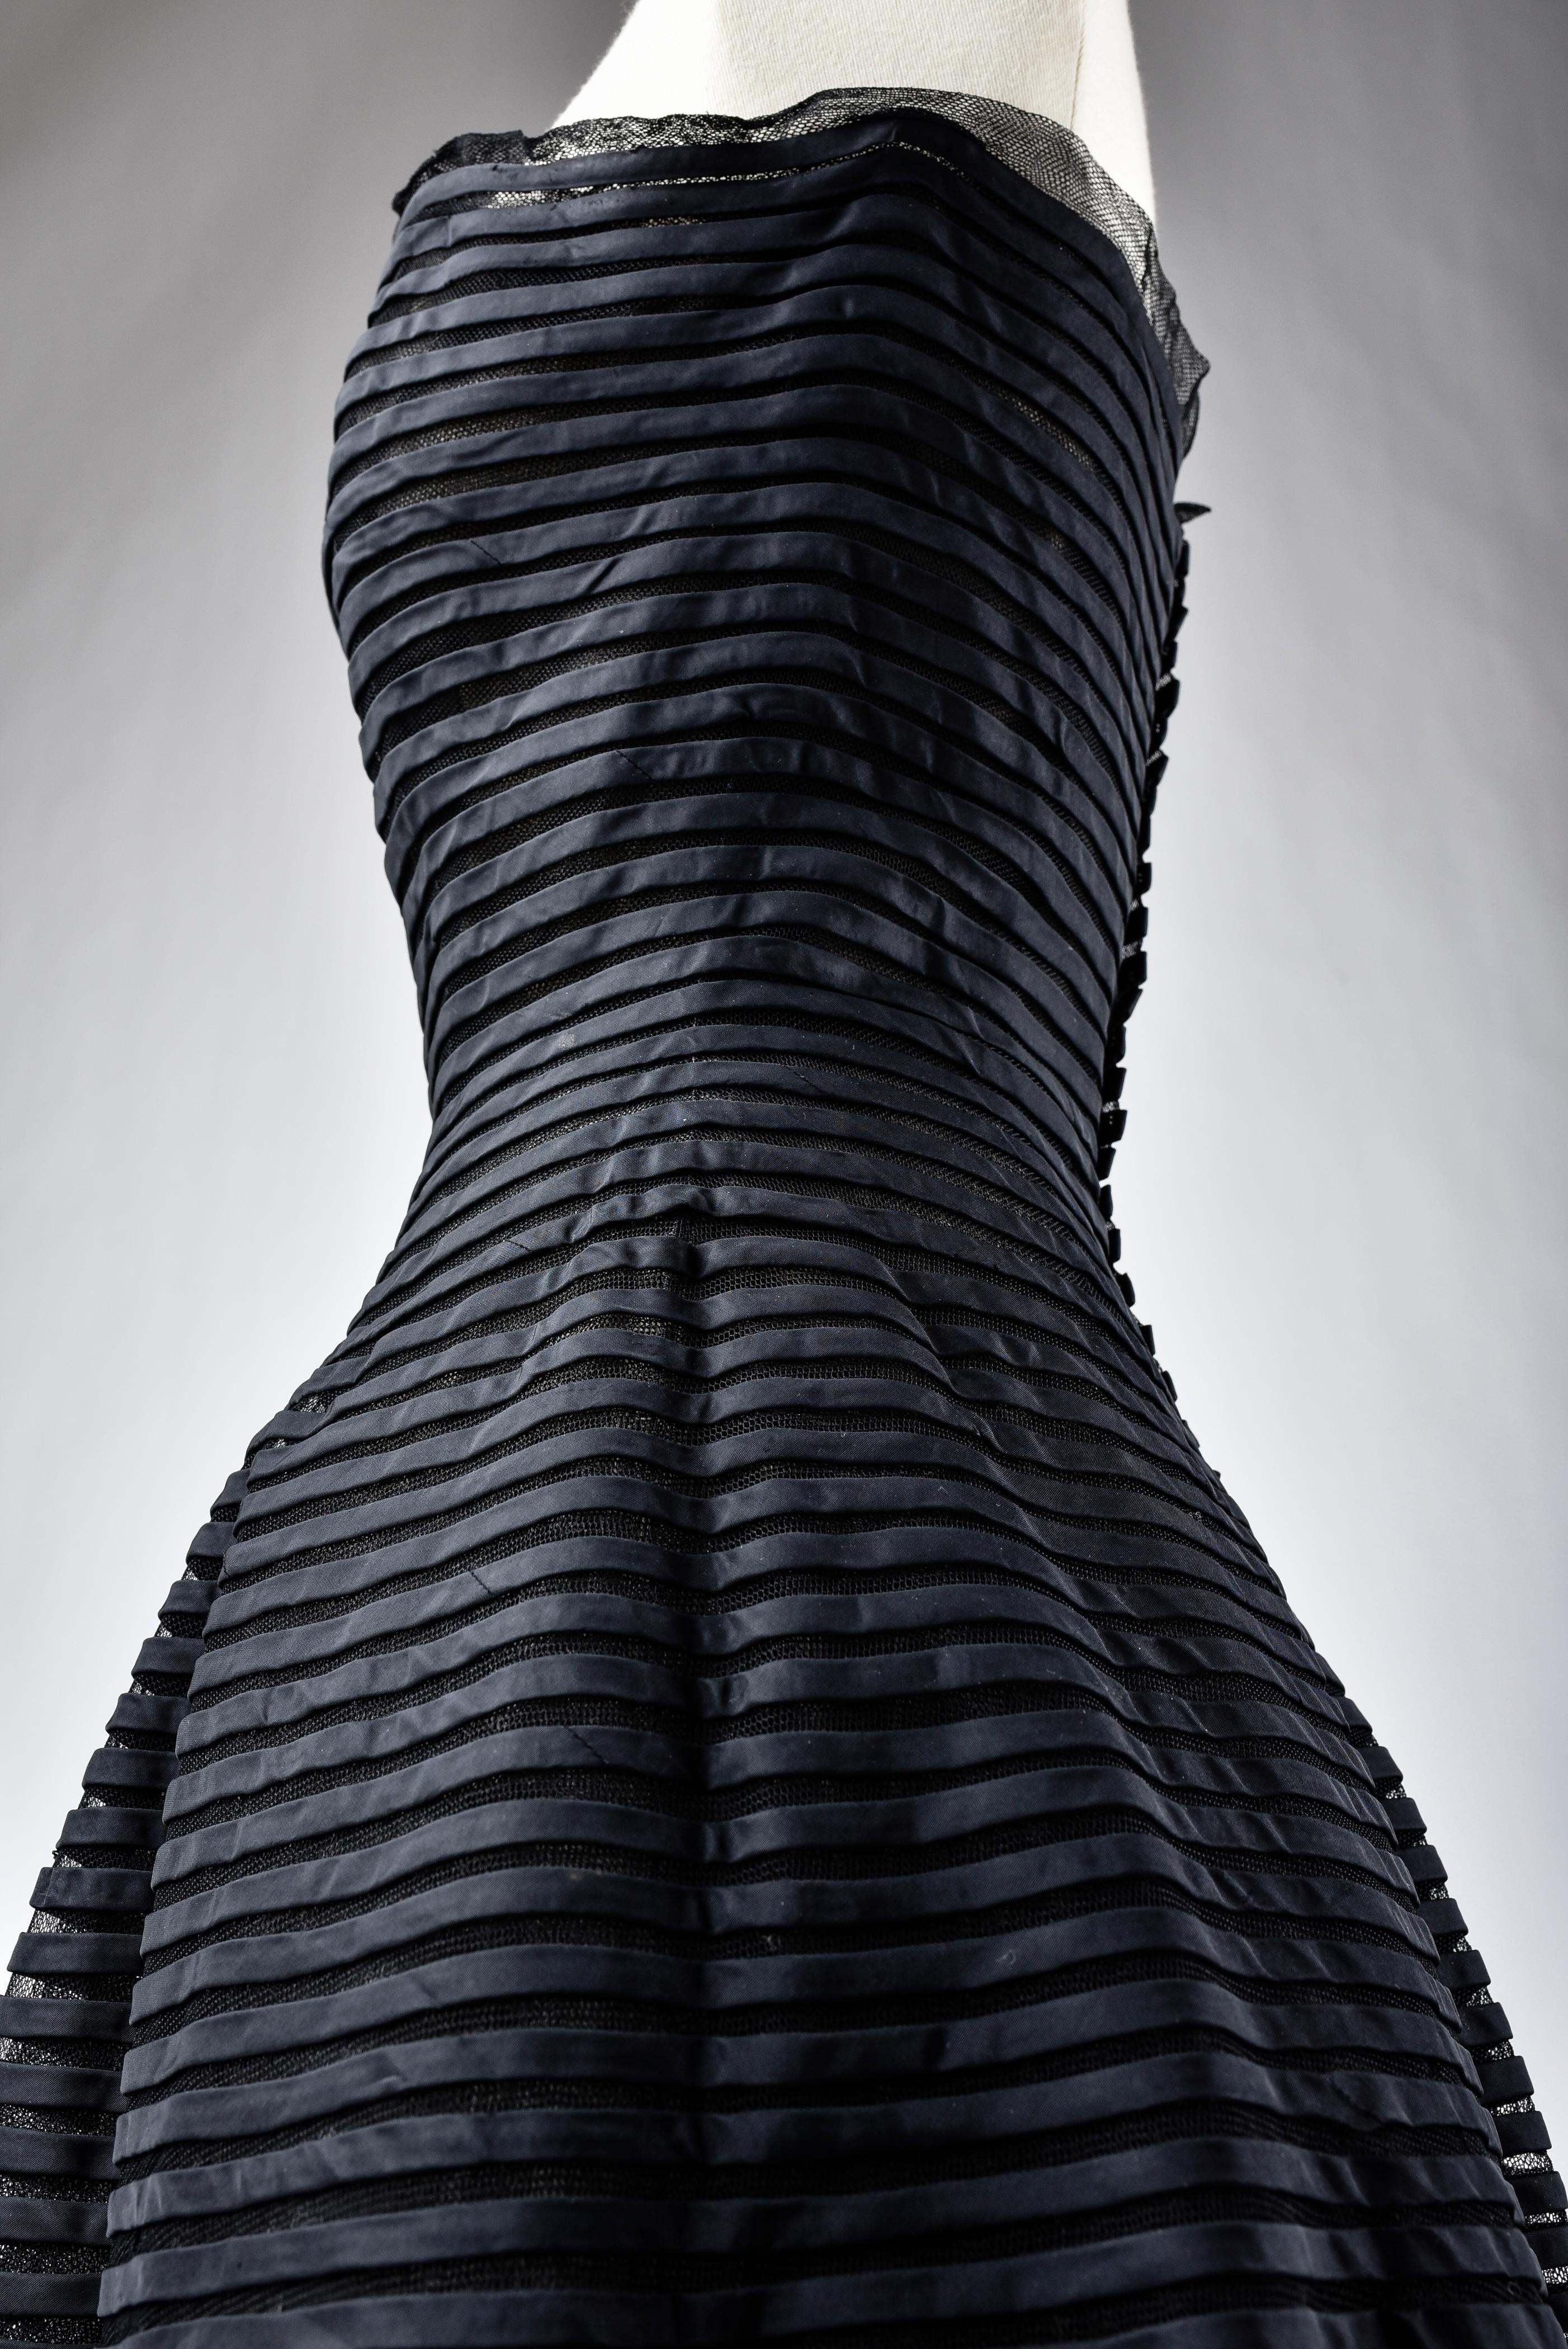 Christian Dior Ball Gown in black tulle & satin appliqué N° 363404 Circa 1955 5